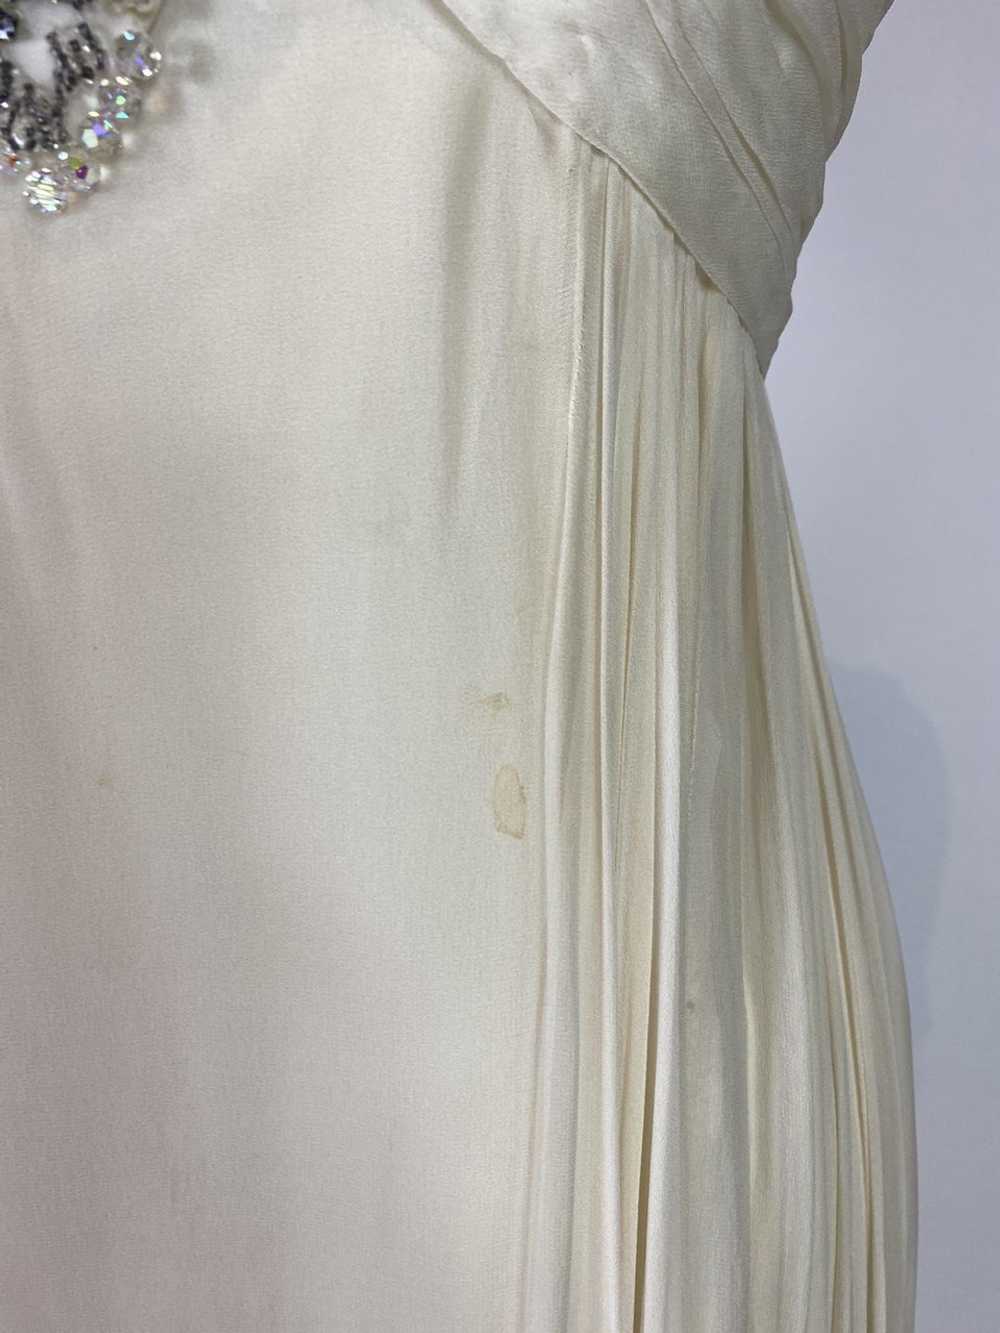 1960s Silk Chiffon Beaded Gown - image 8